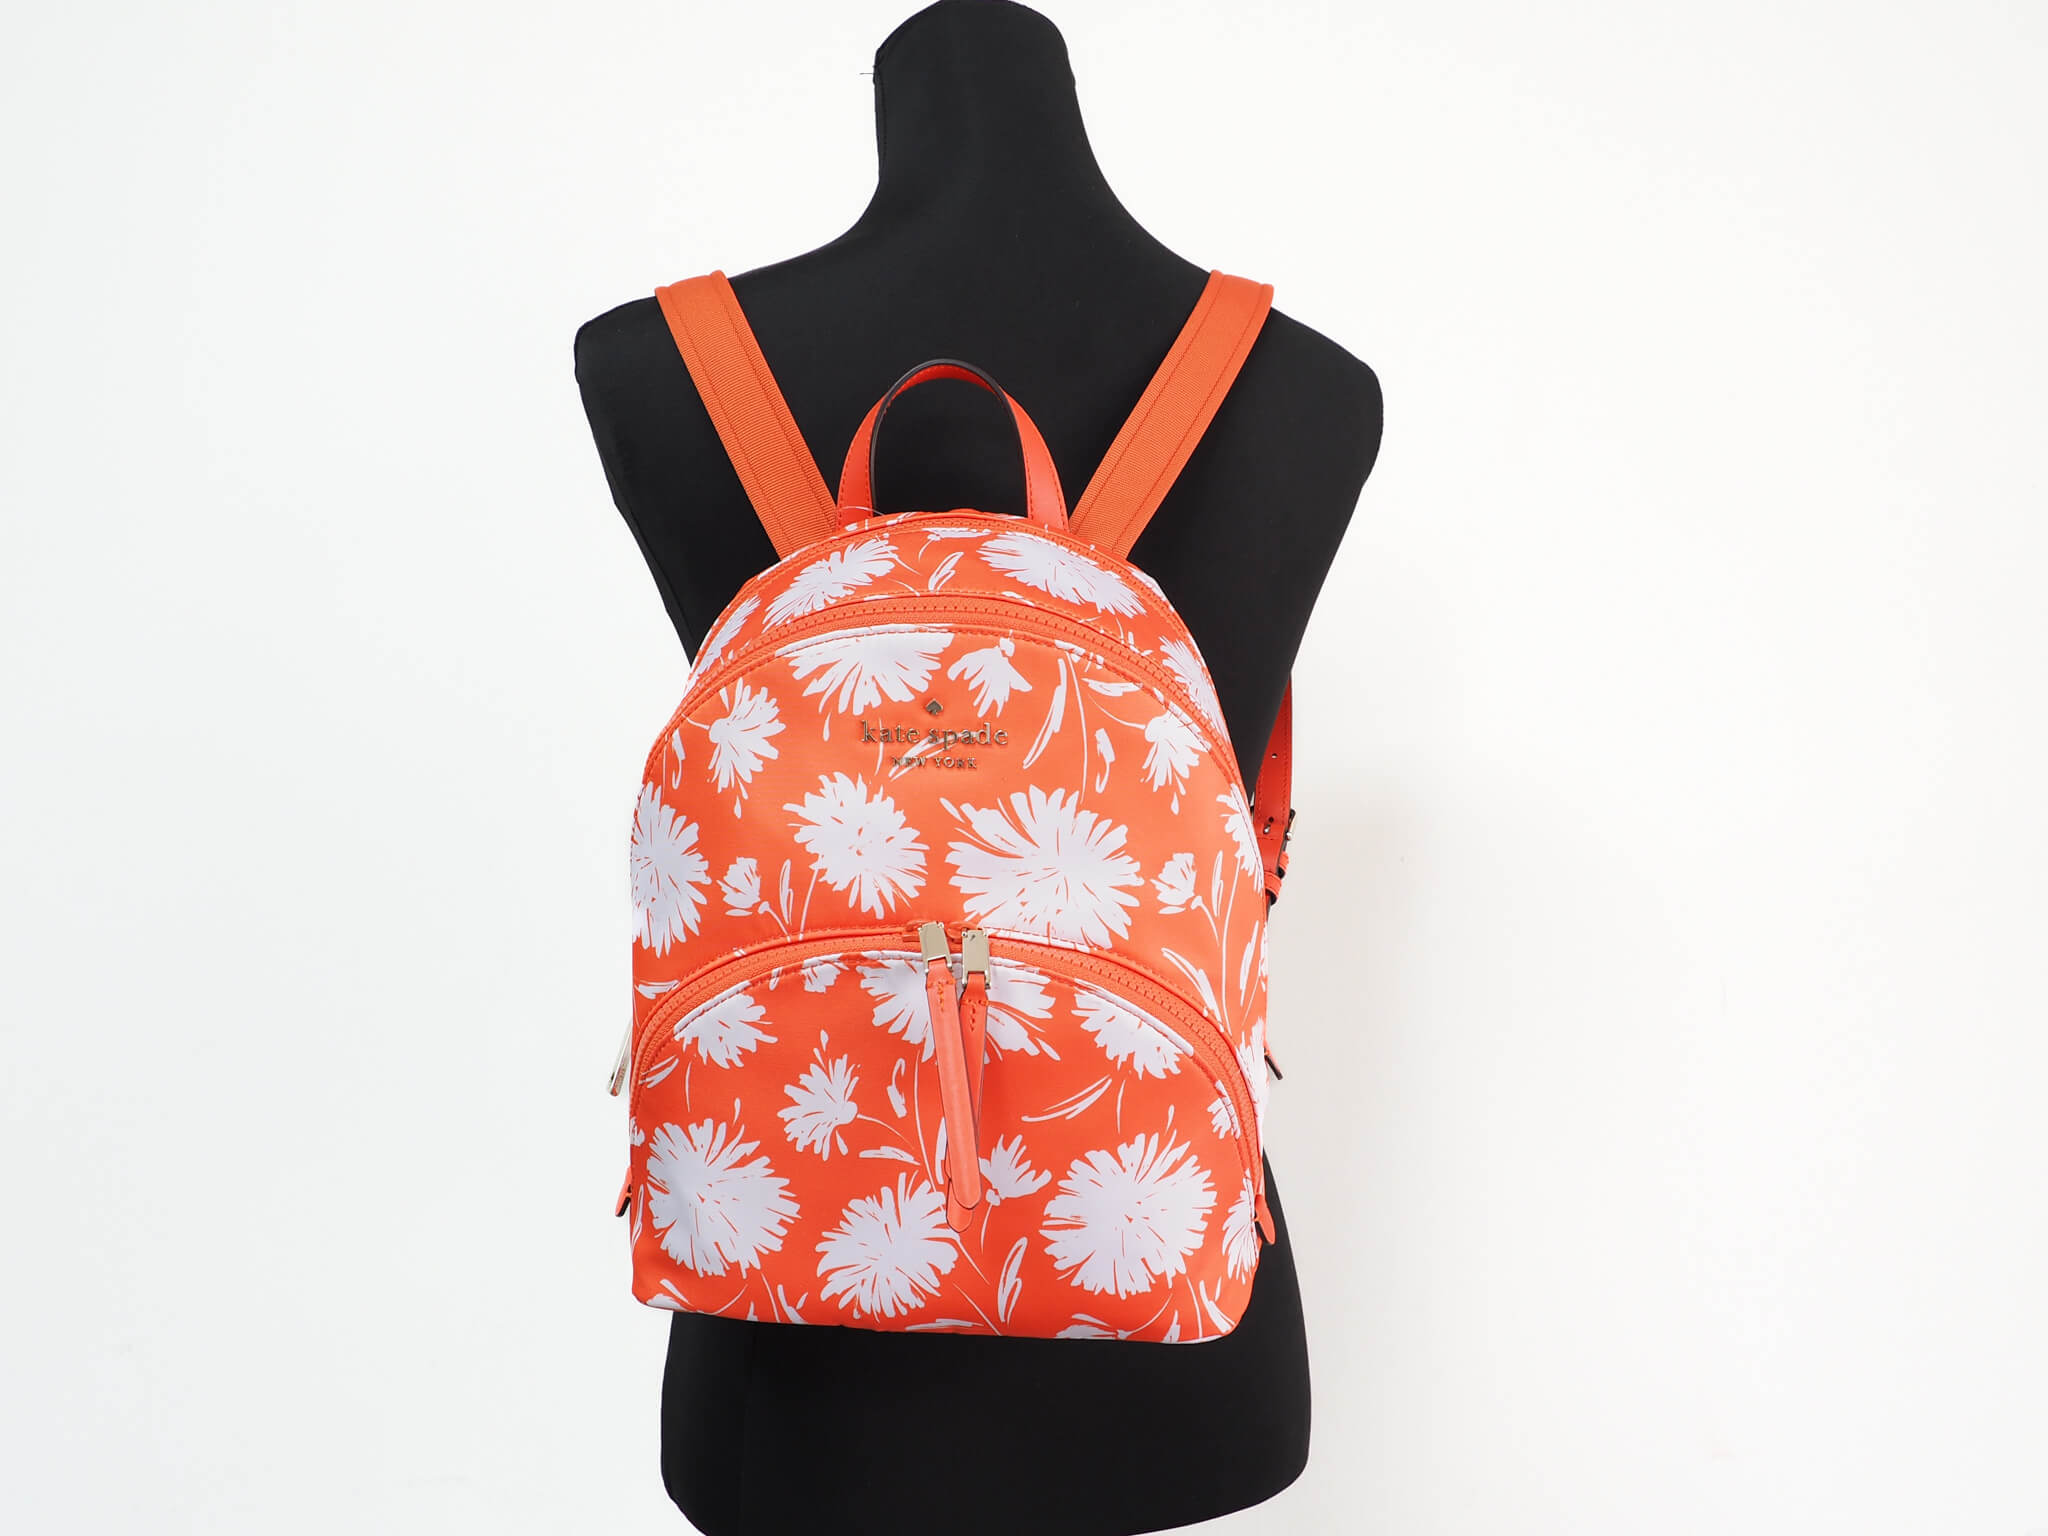 Kate Spade Karissa Wild Bloom Bright Orange Multi Nylon Medium Backpac –  